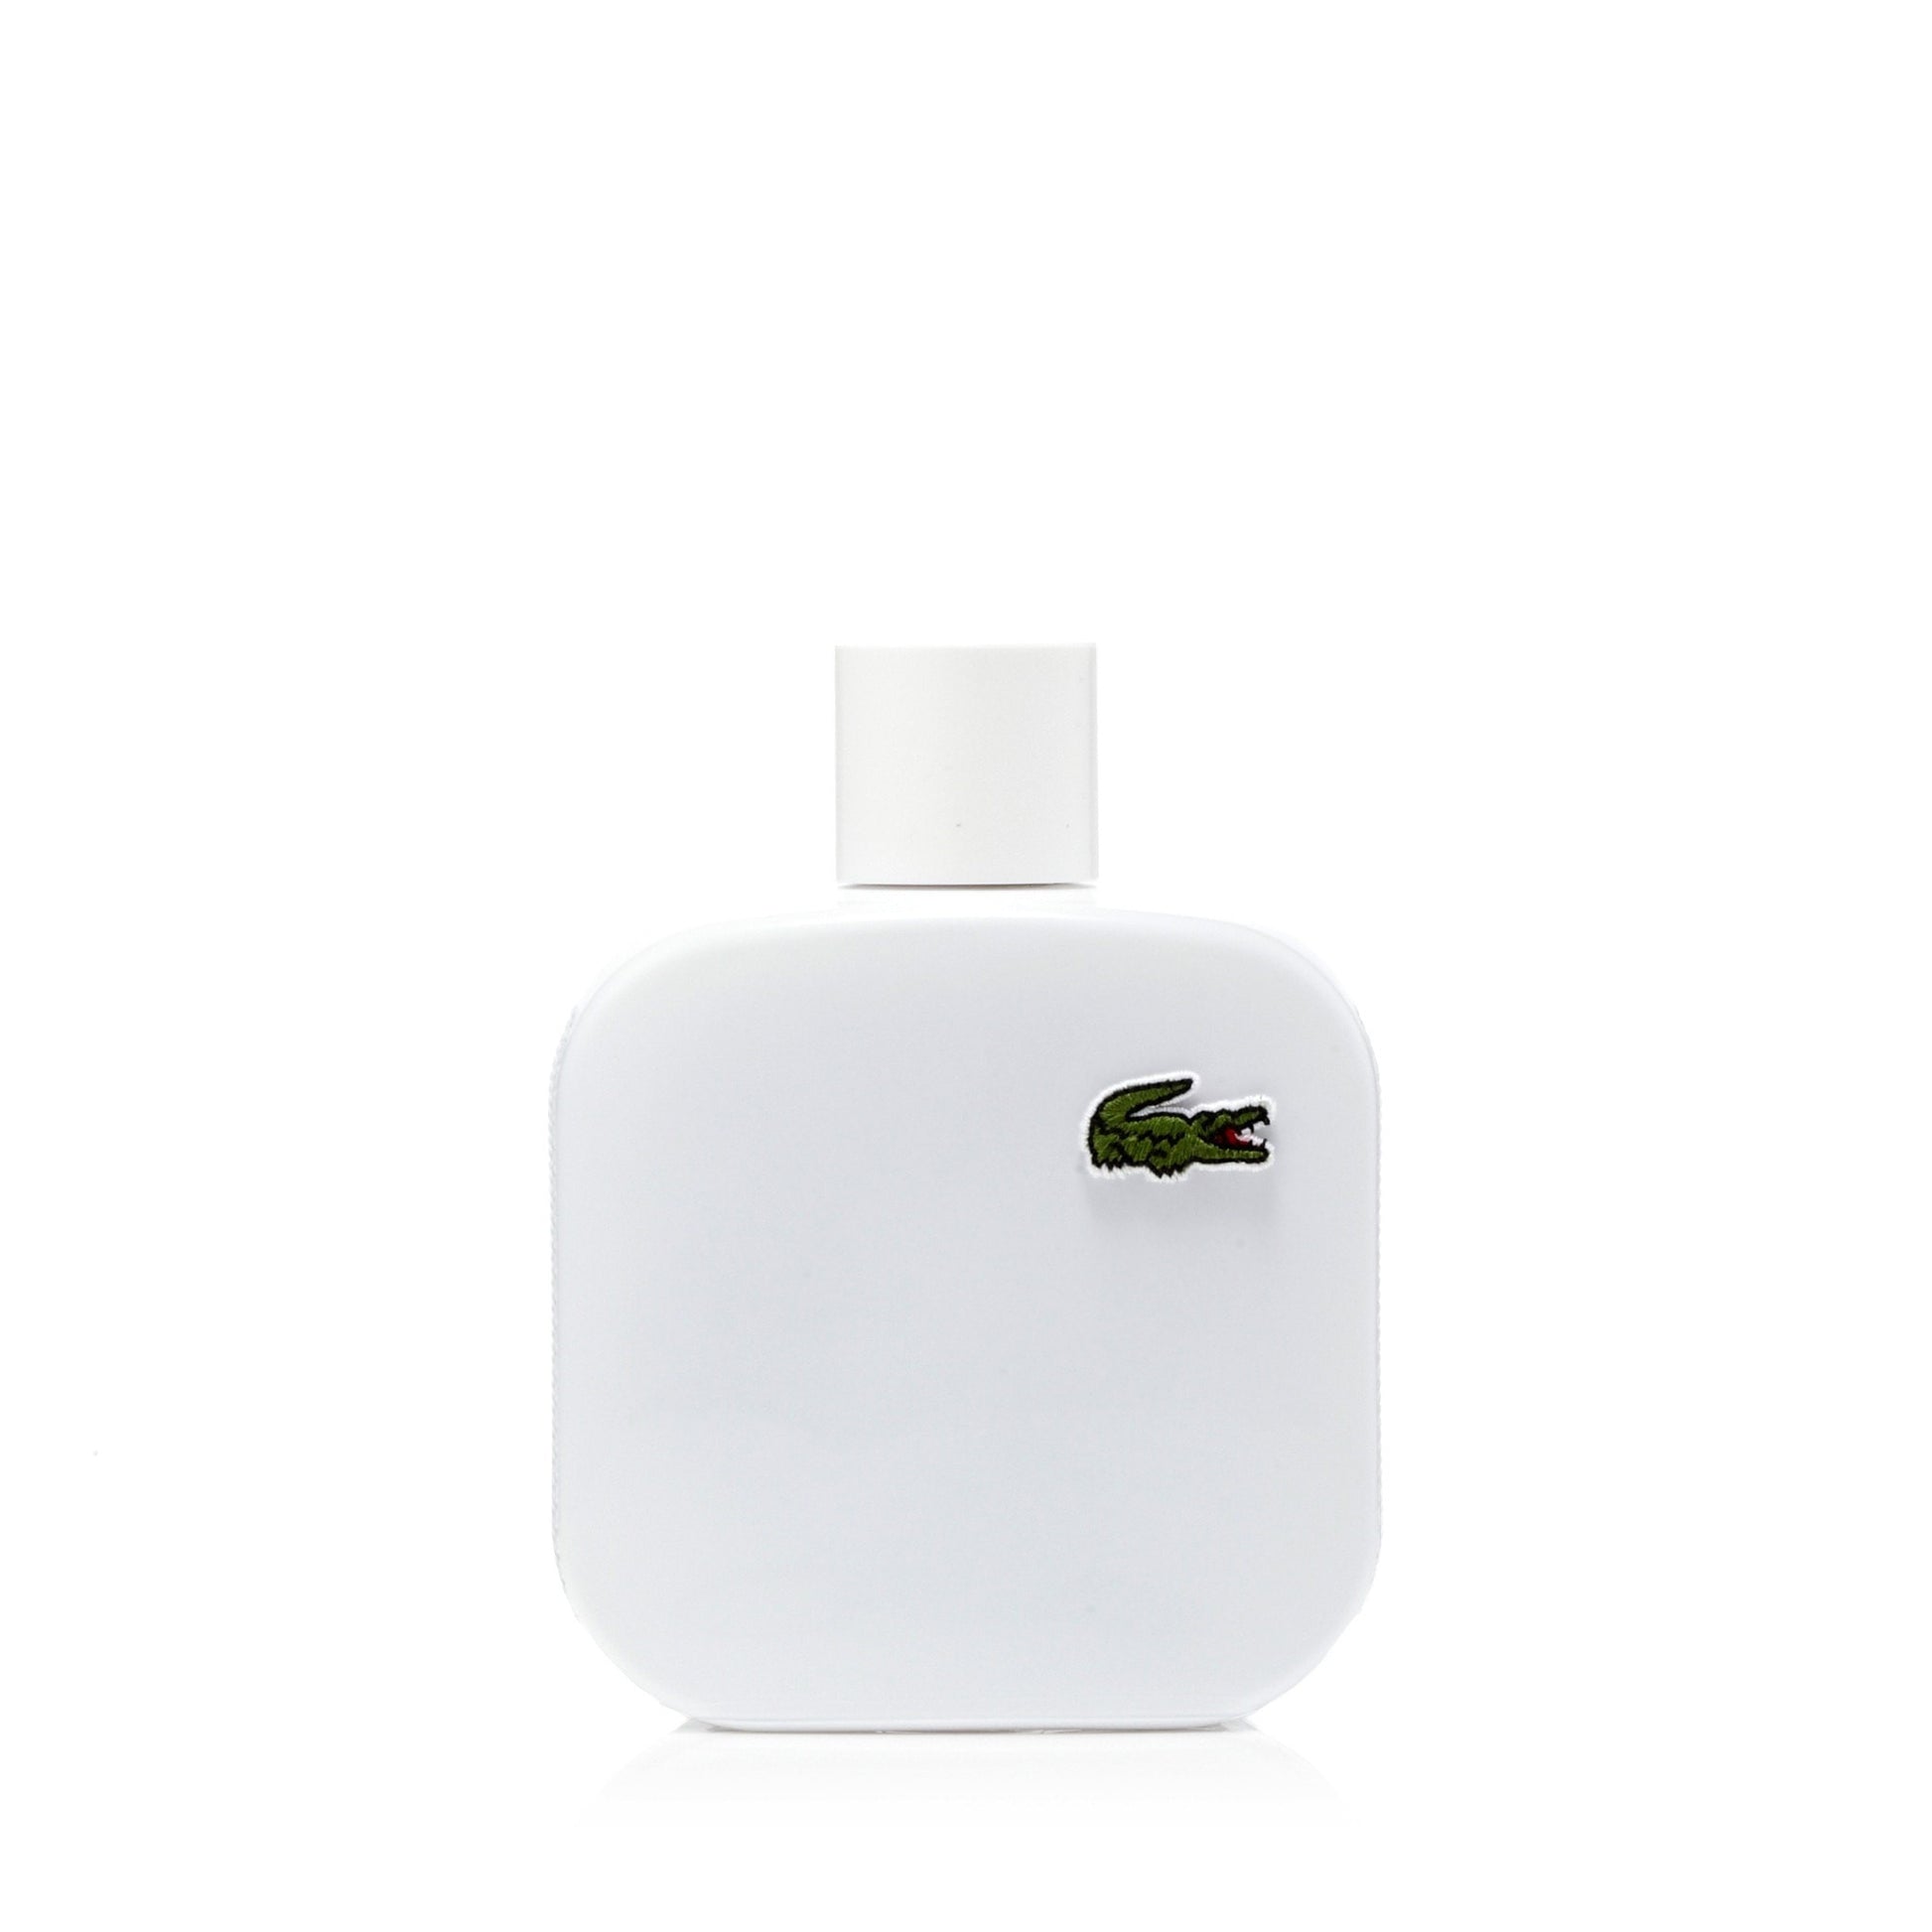 Lacoste L.12.12 Blanc Eau de Toilette Mens Spray 3.3 oz. Click to open in modal